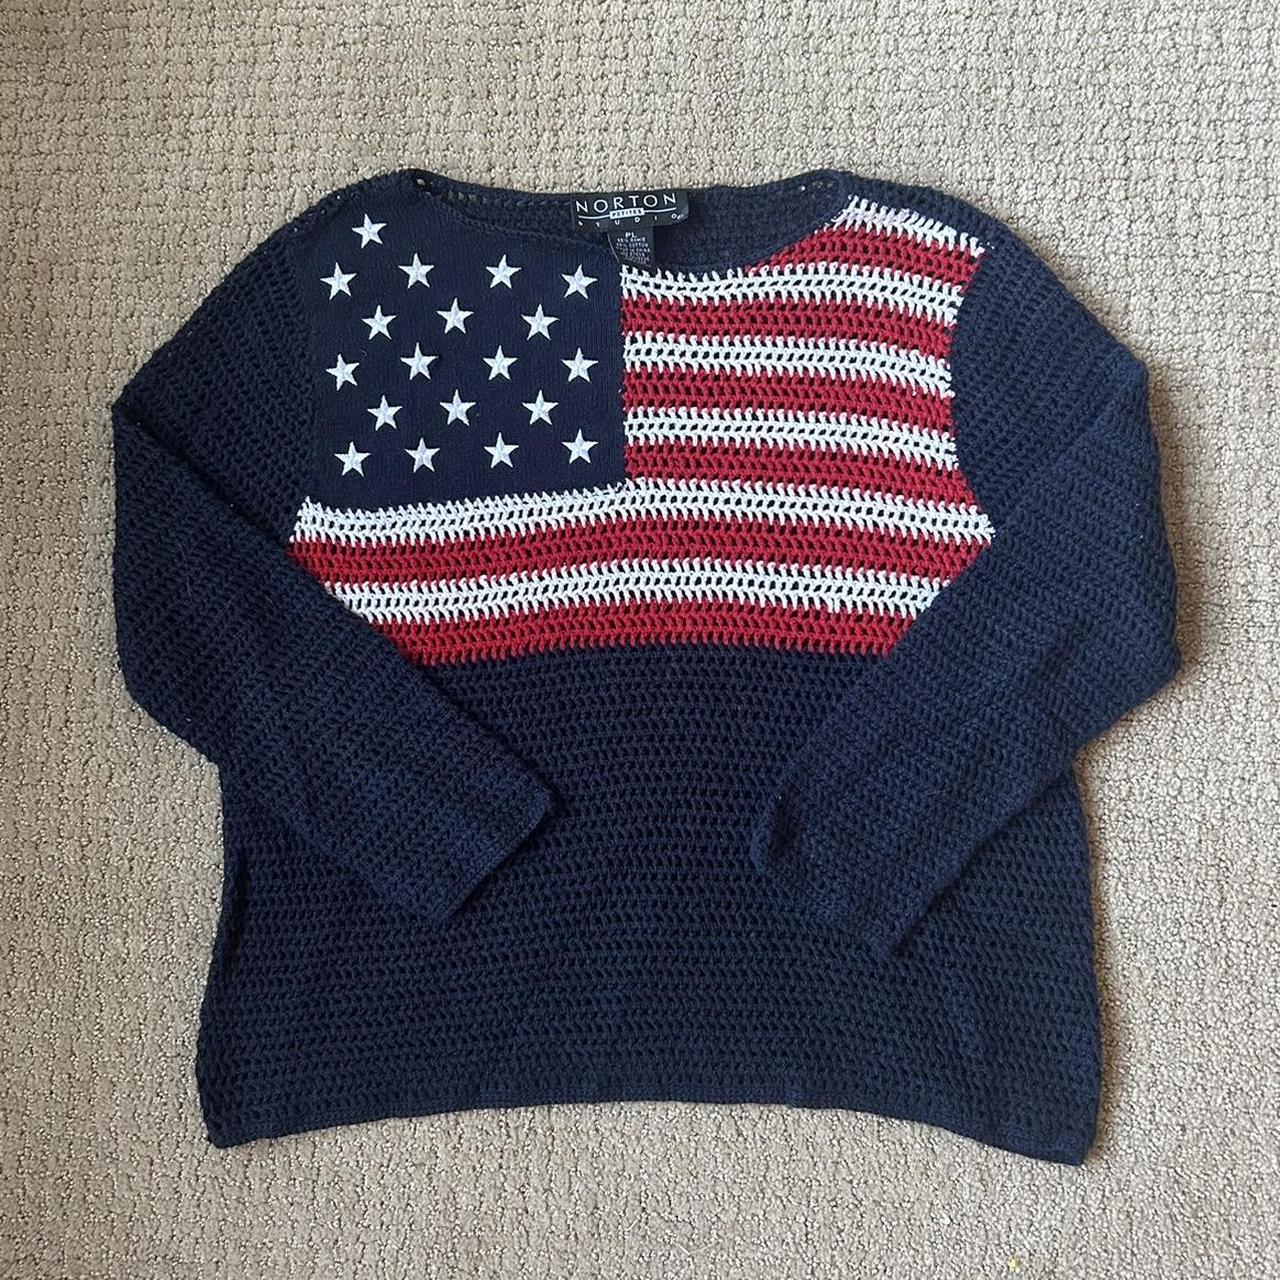 coastal grandma knitted sweater :) originally... - Depop